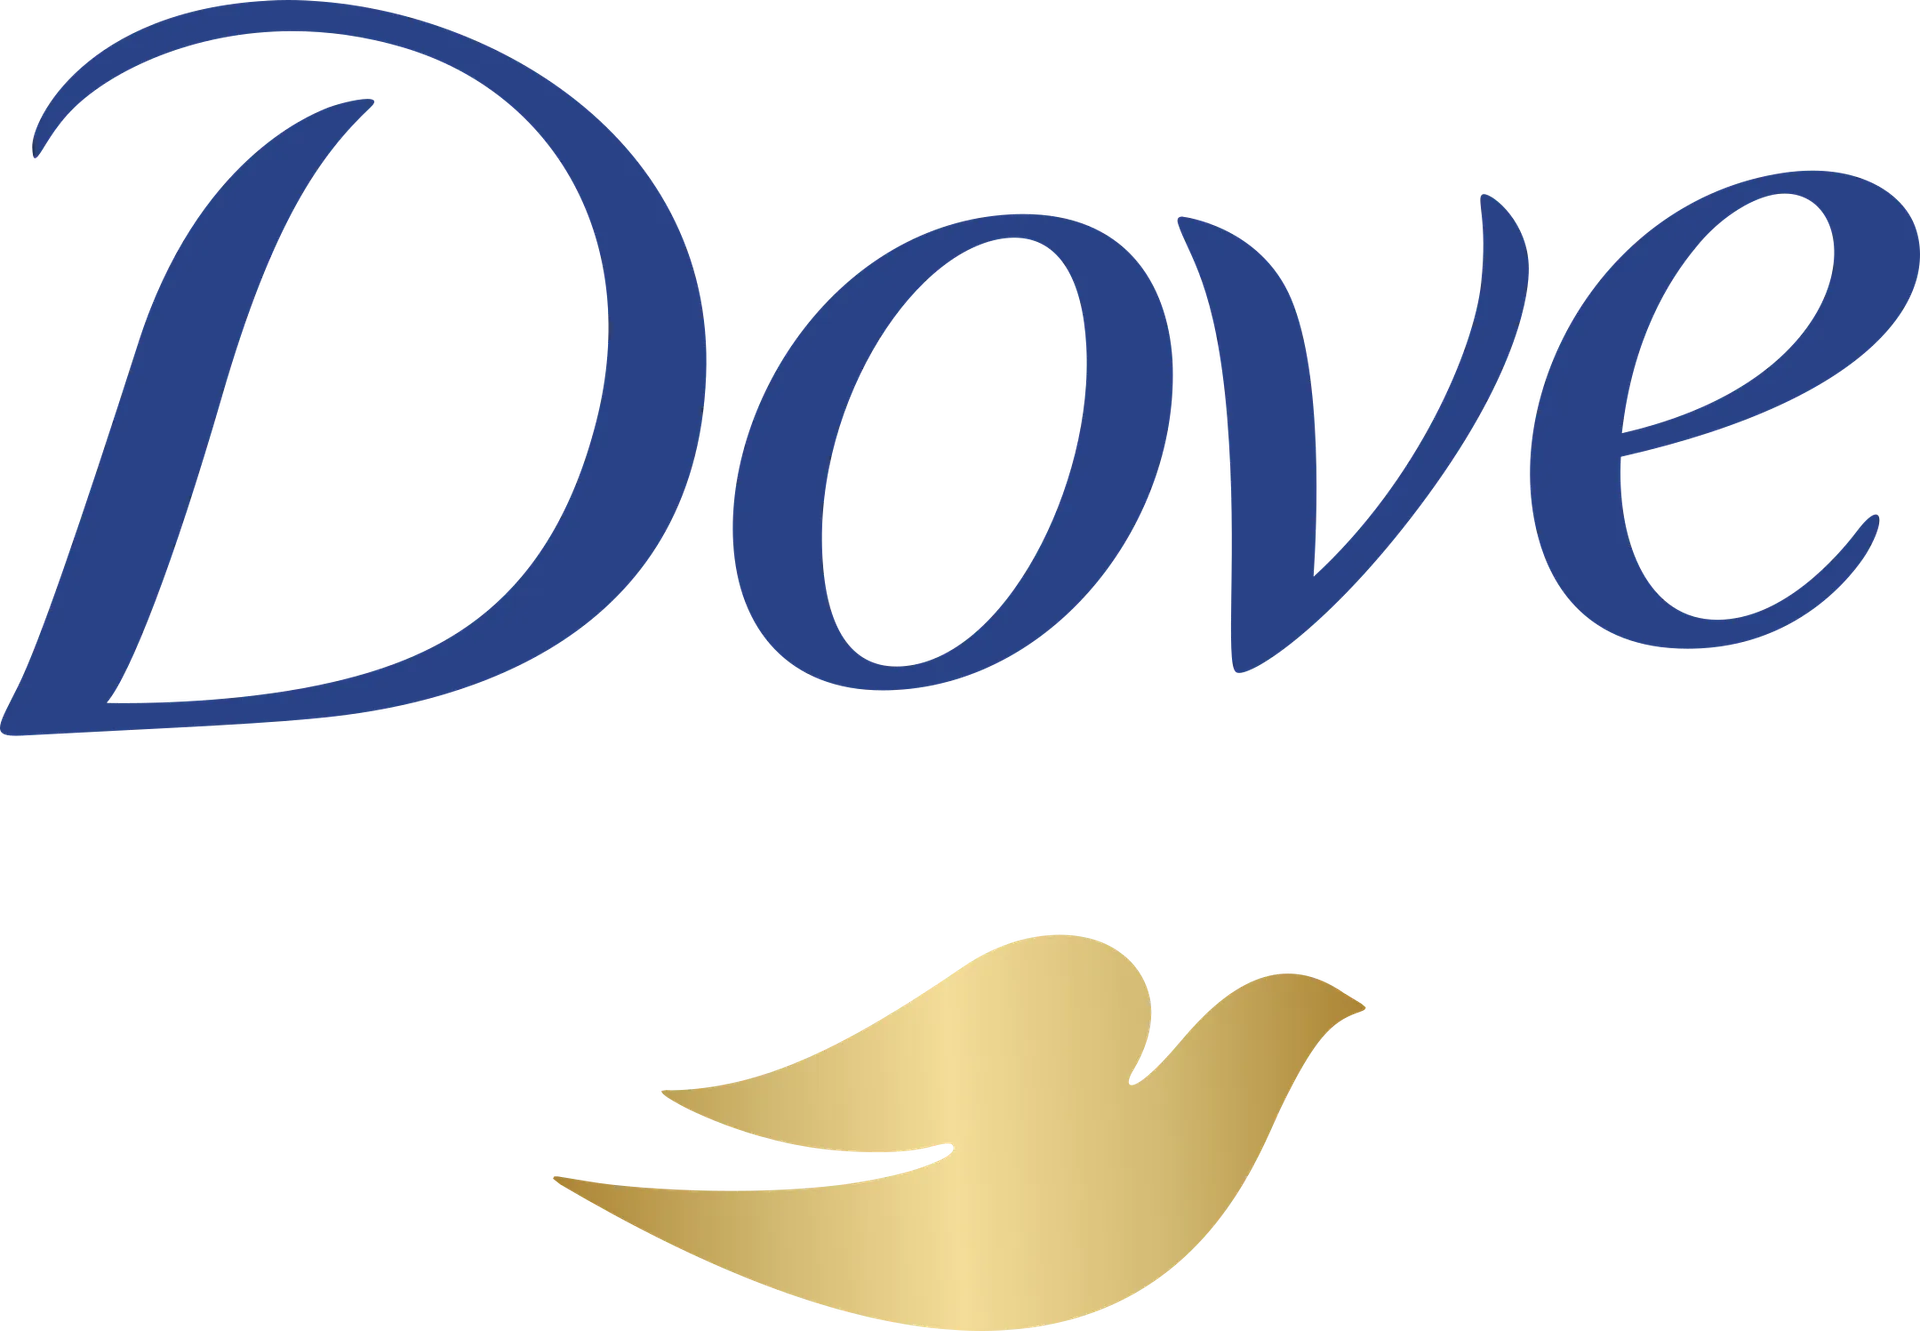 DOVE logo